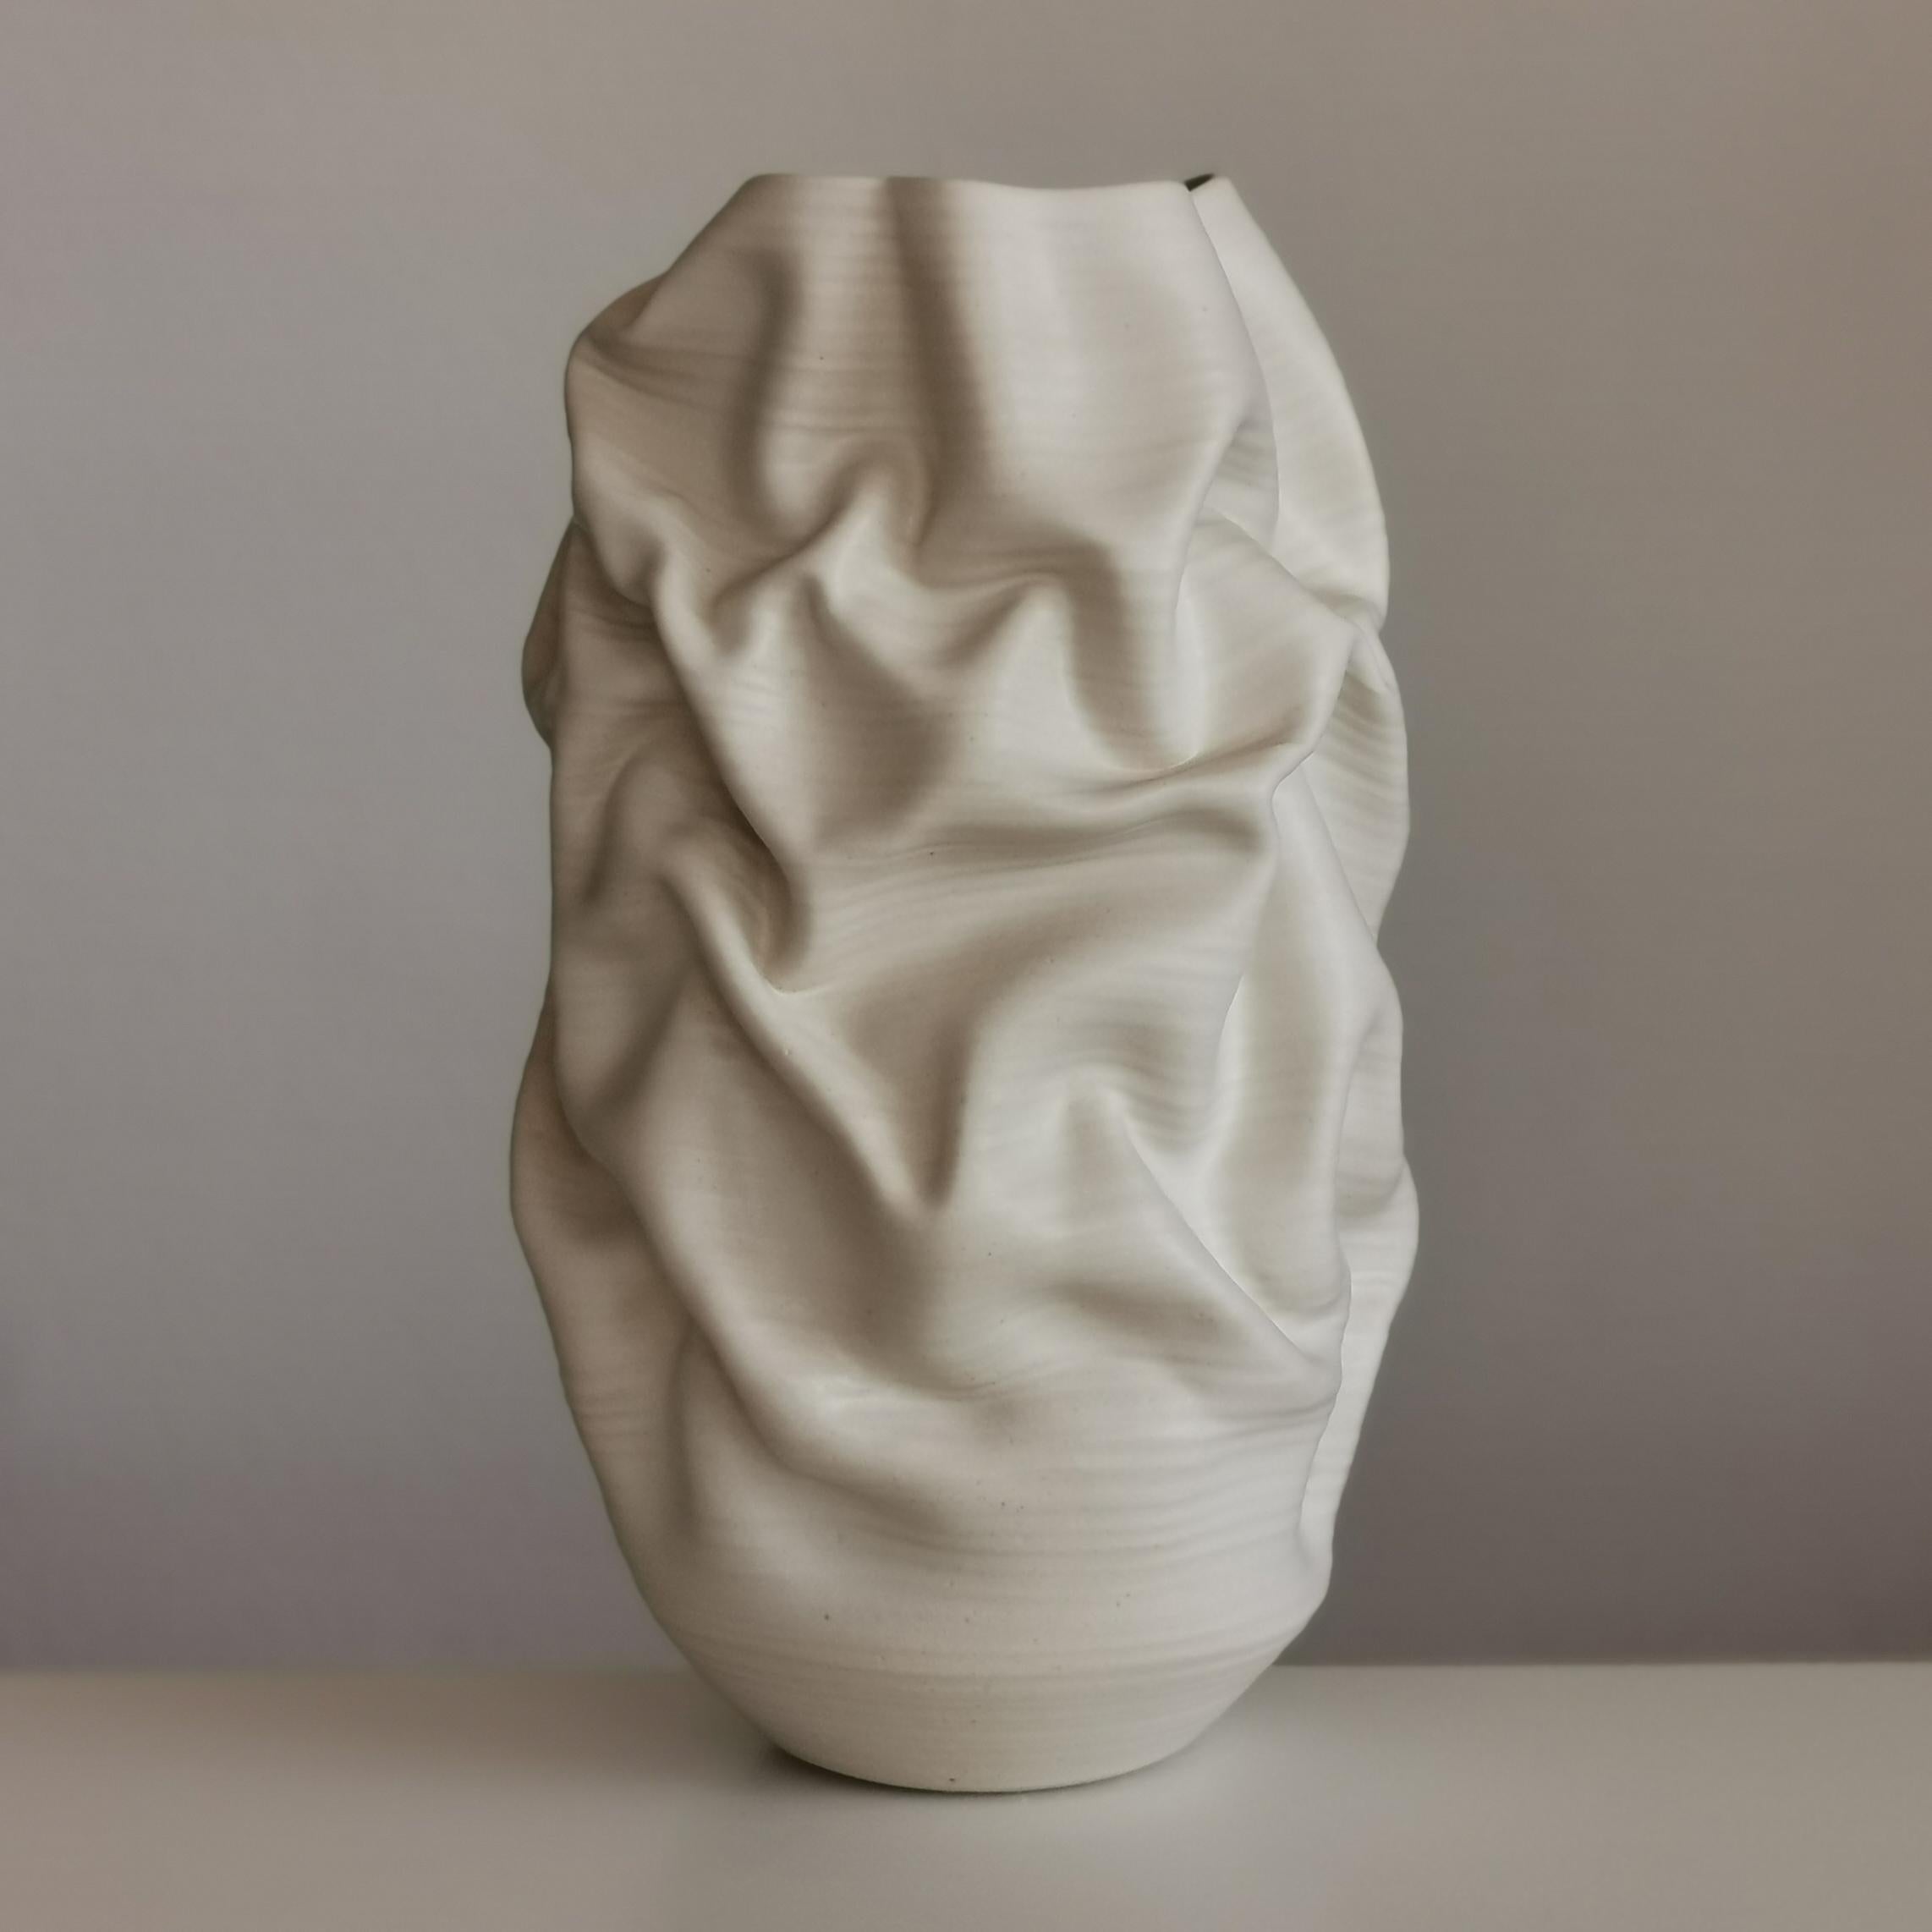 Tall White Crumpled Form No 31, Ceramic Vessel by Nicholas Arroyave-Portela 2